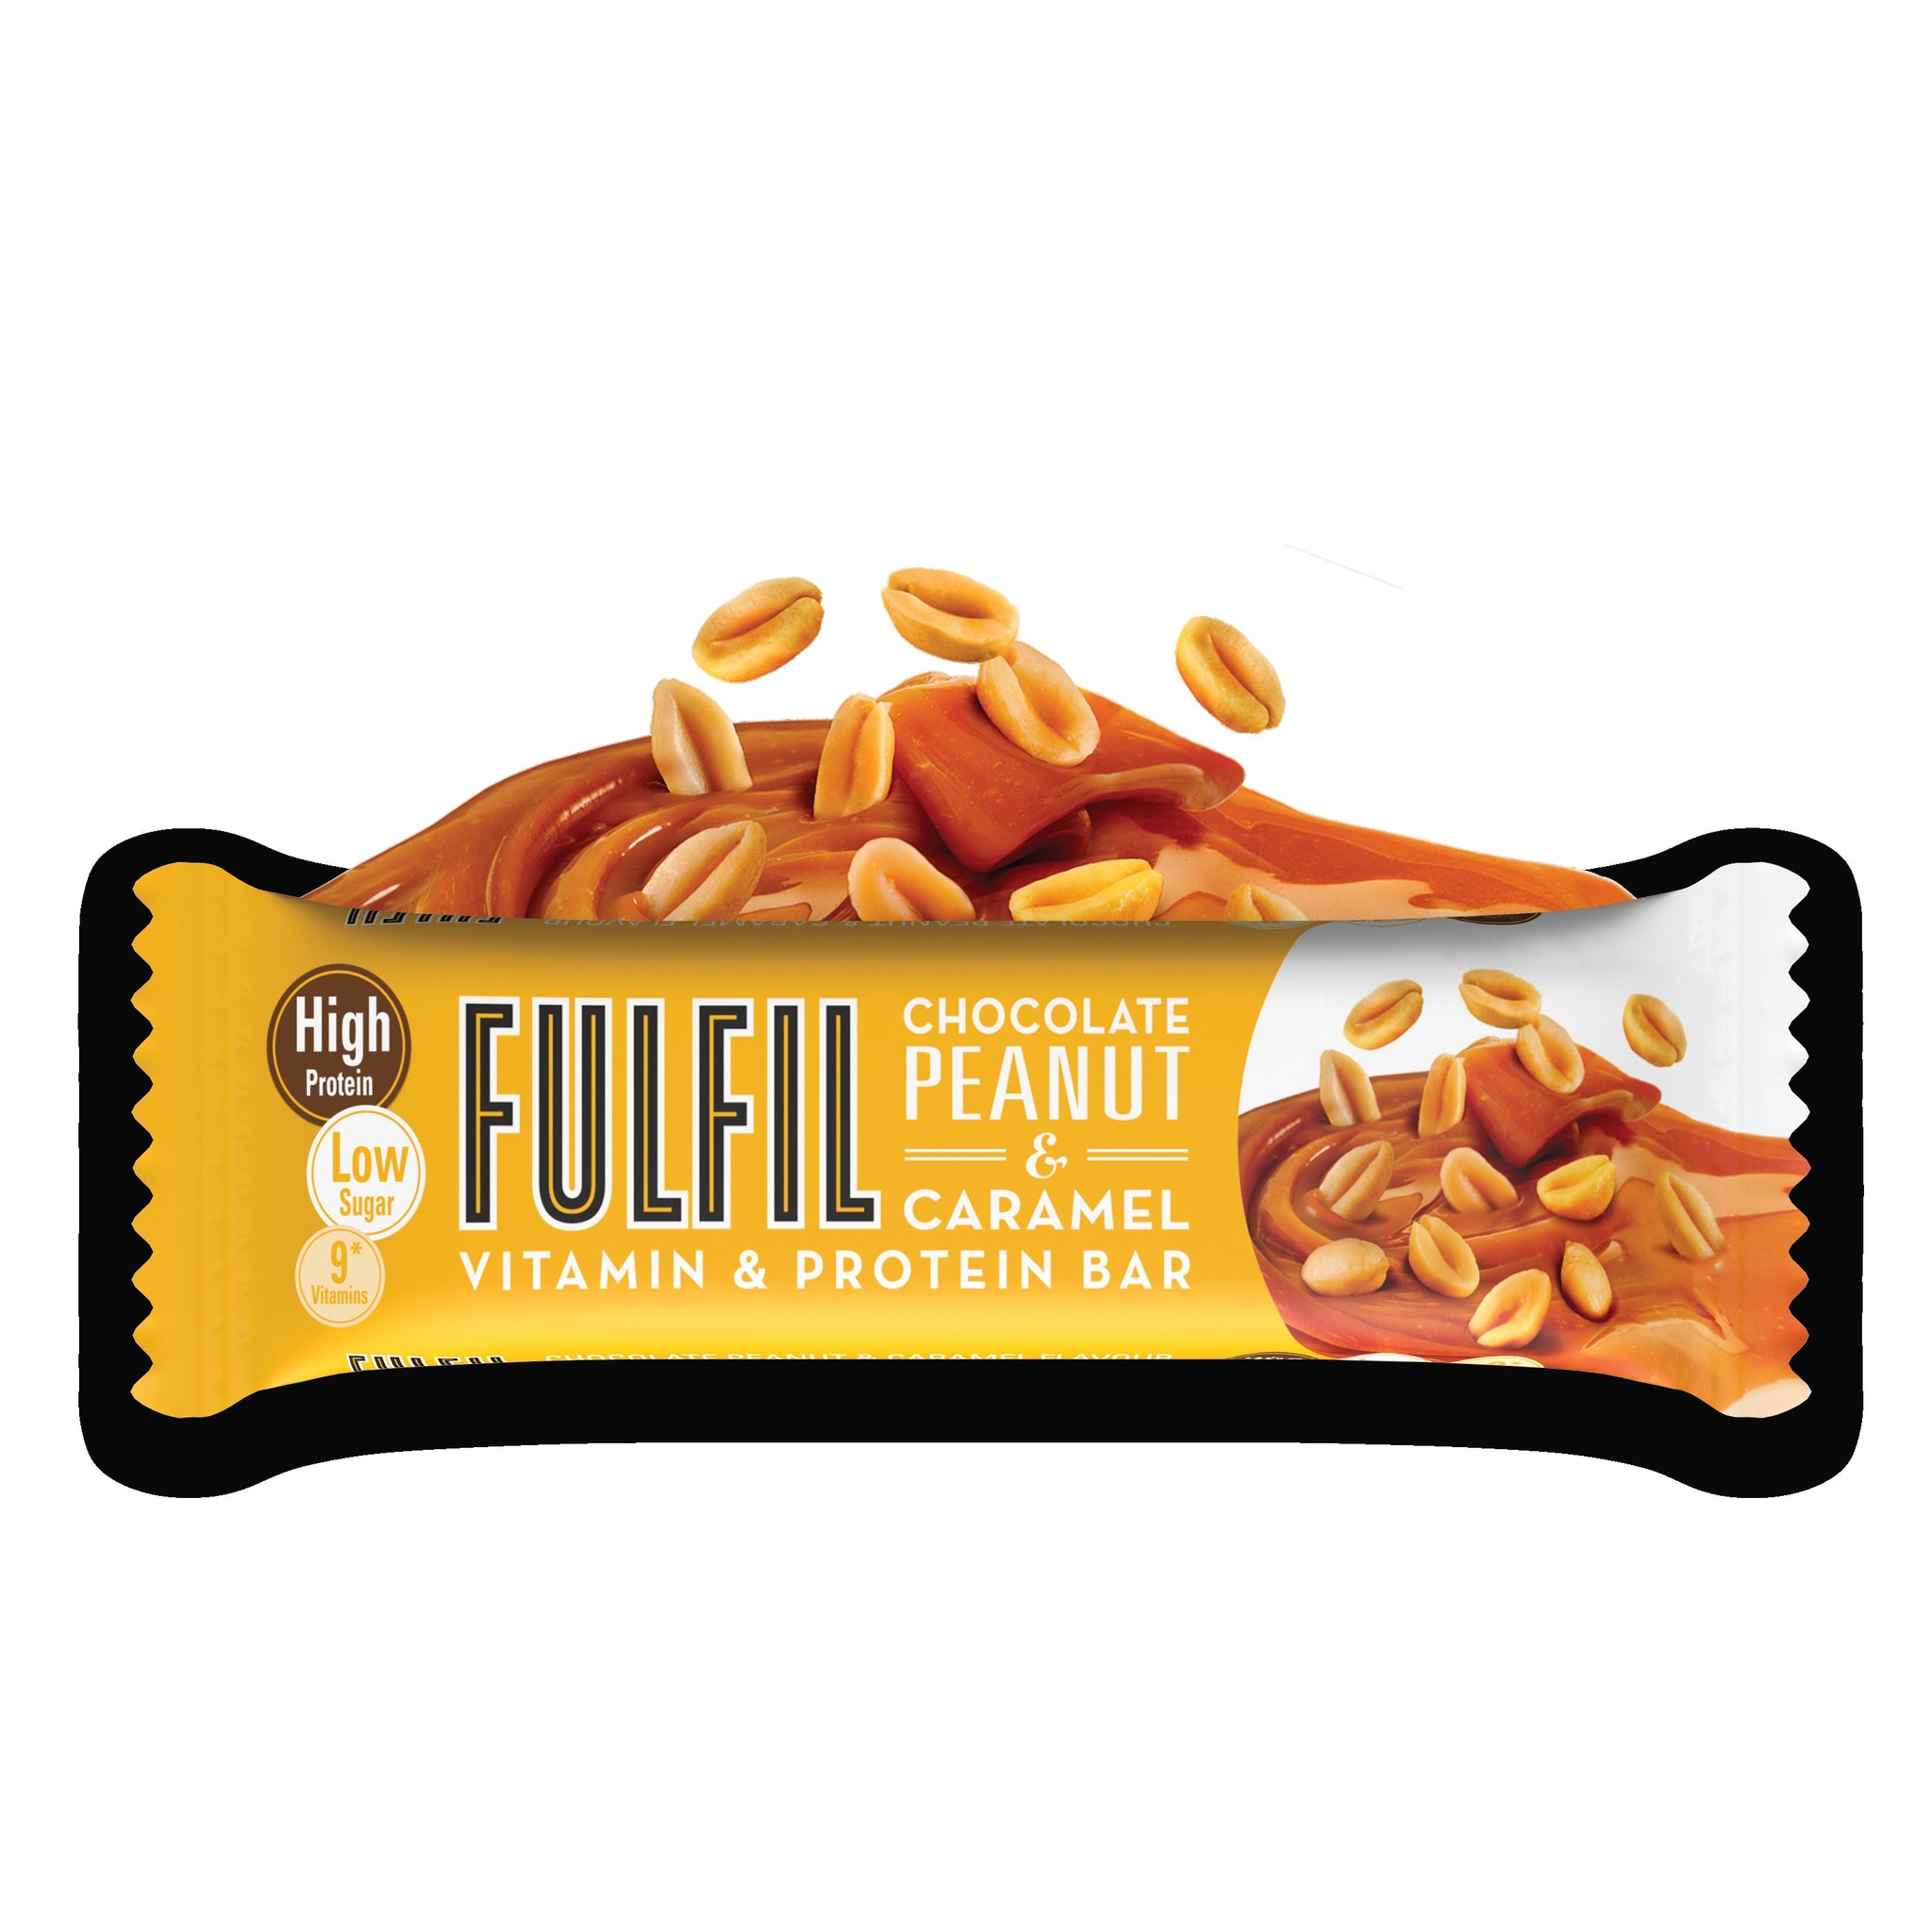 Fulfil Chocolate Peanut & Caramel - Vitamin and Protein Bar 15 x